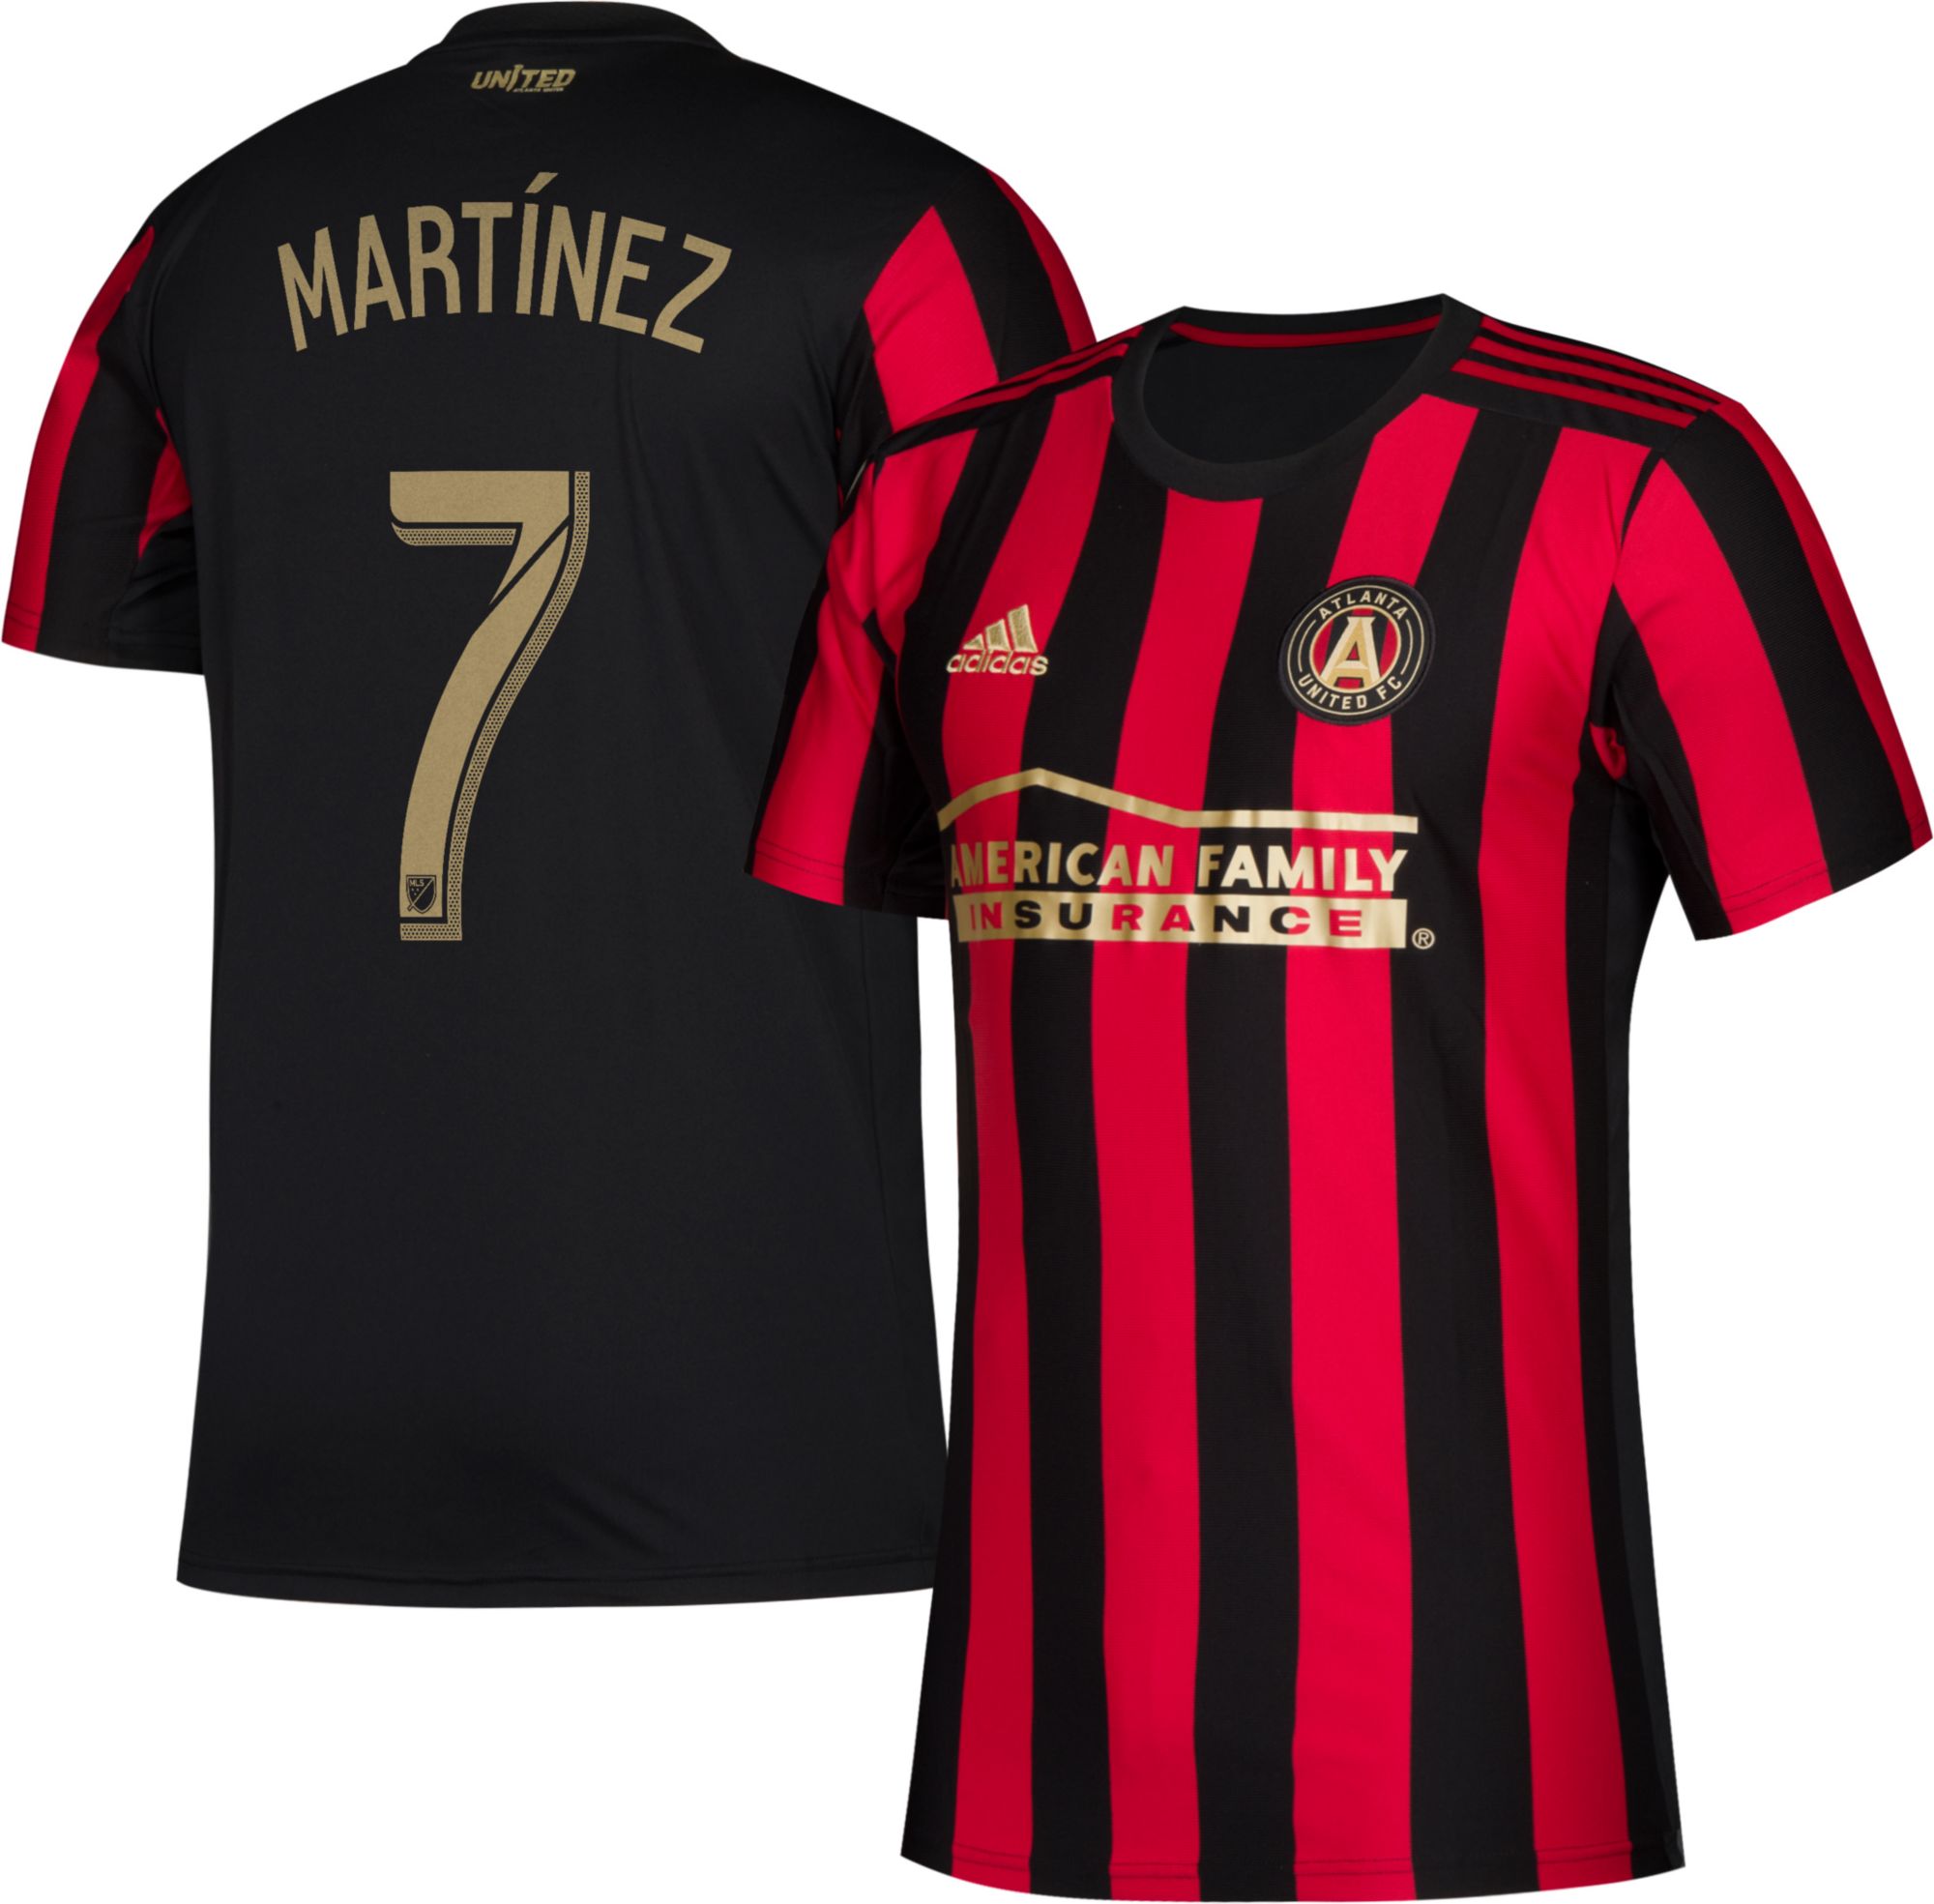 martinez jersey atlanta united